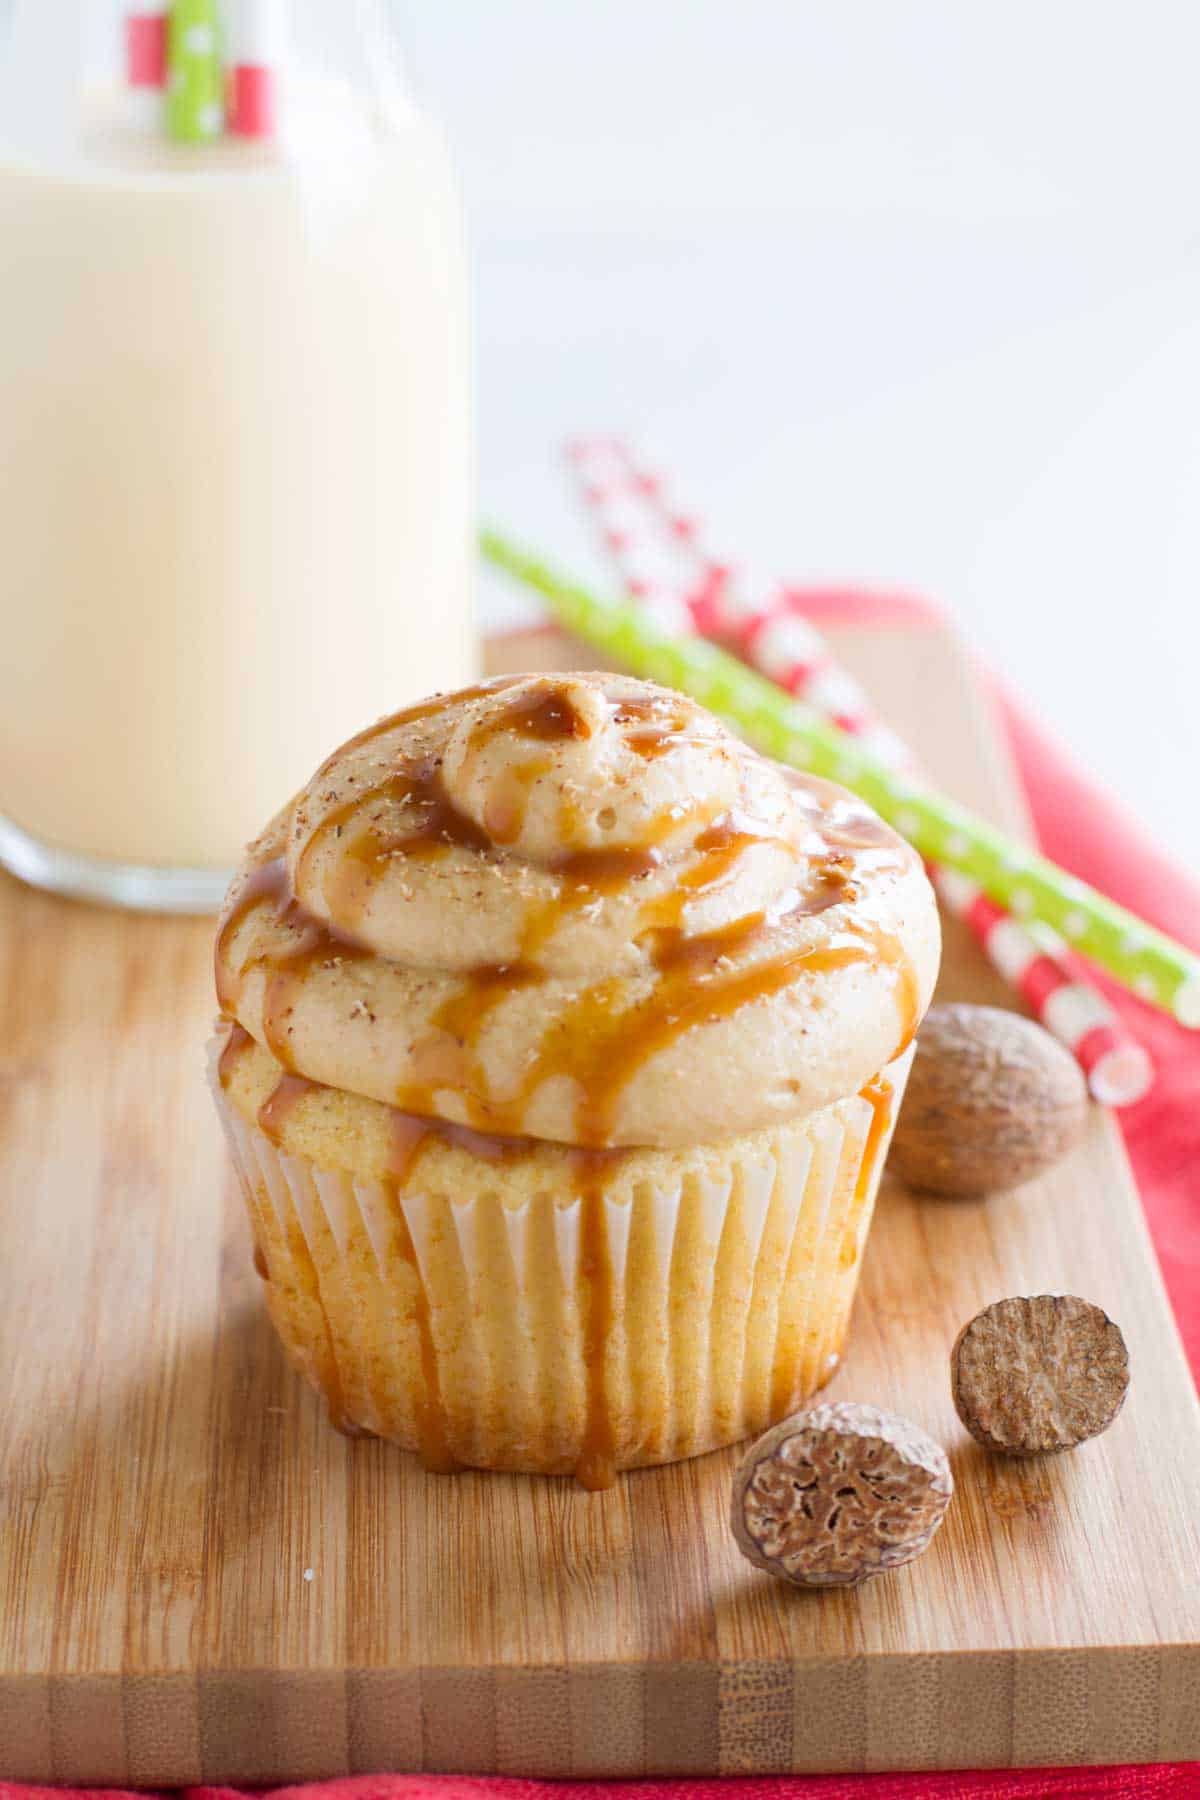 Eggnog Cupcake on a cutting board with fresh nutmeg on the side.